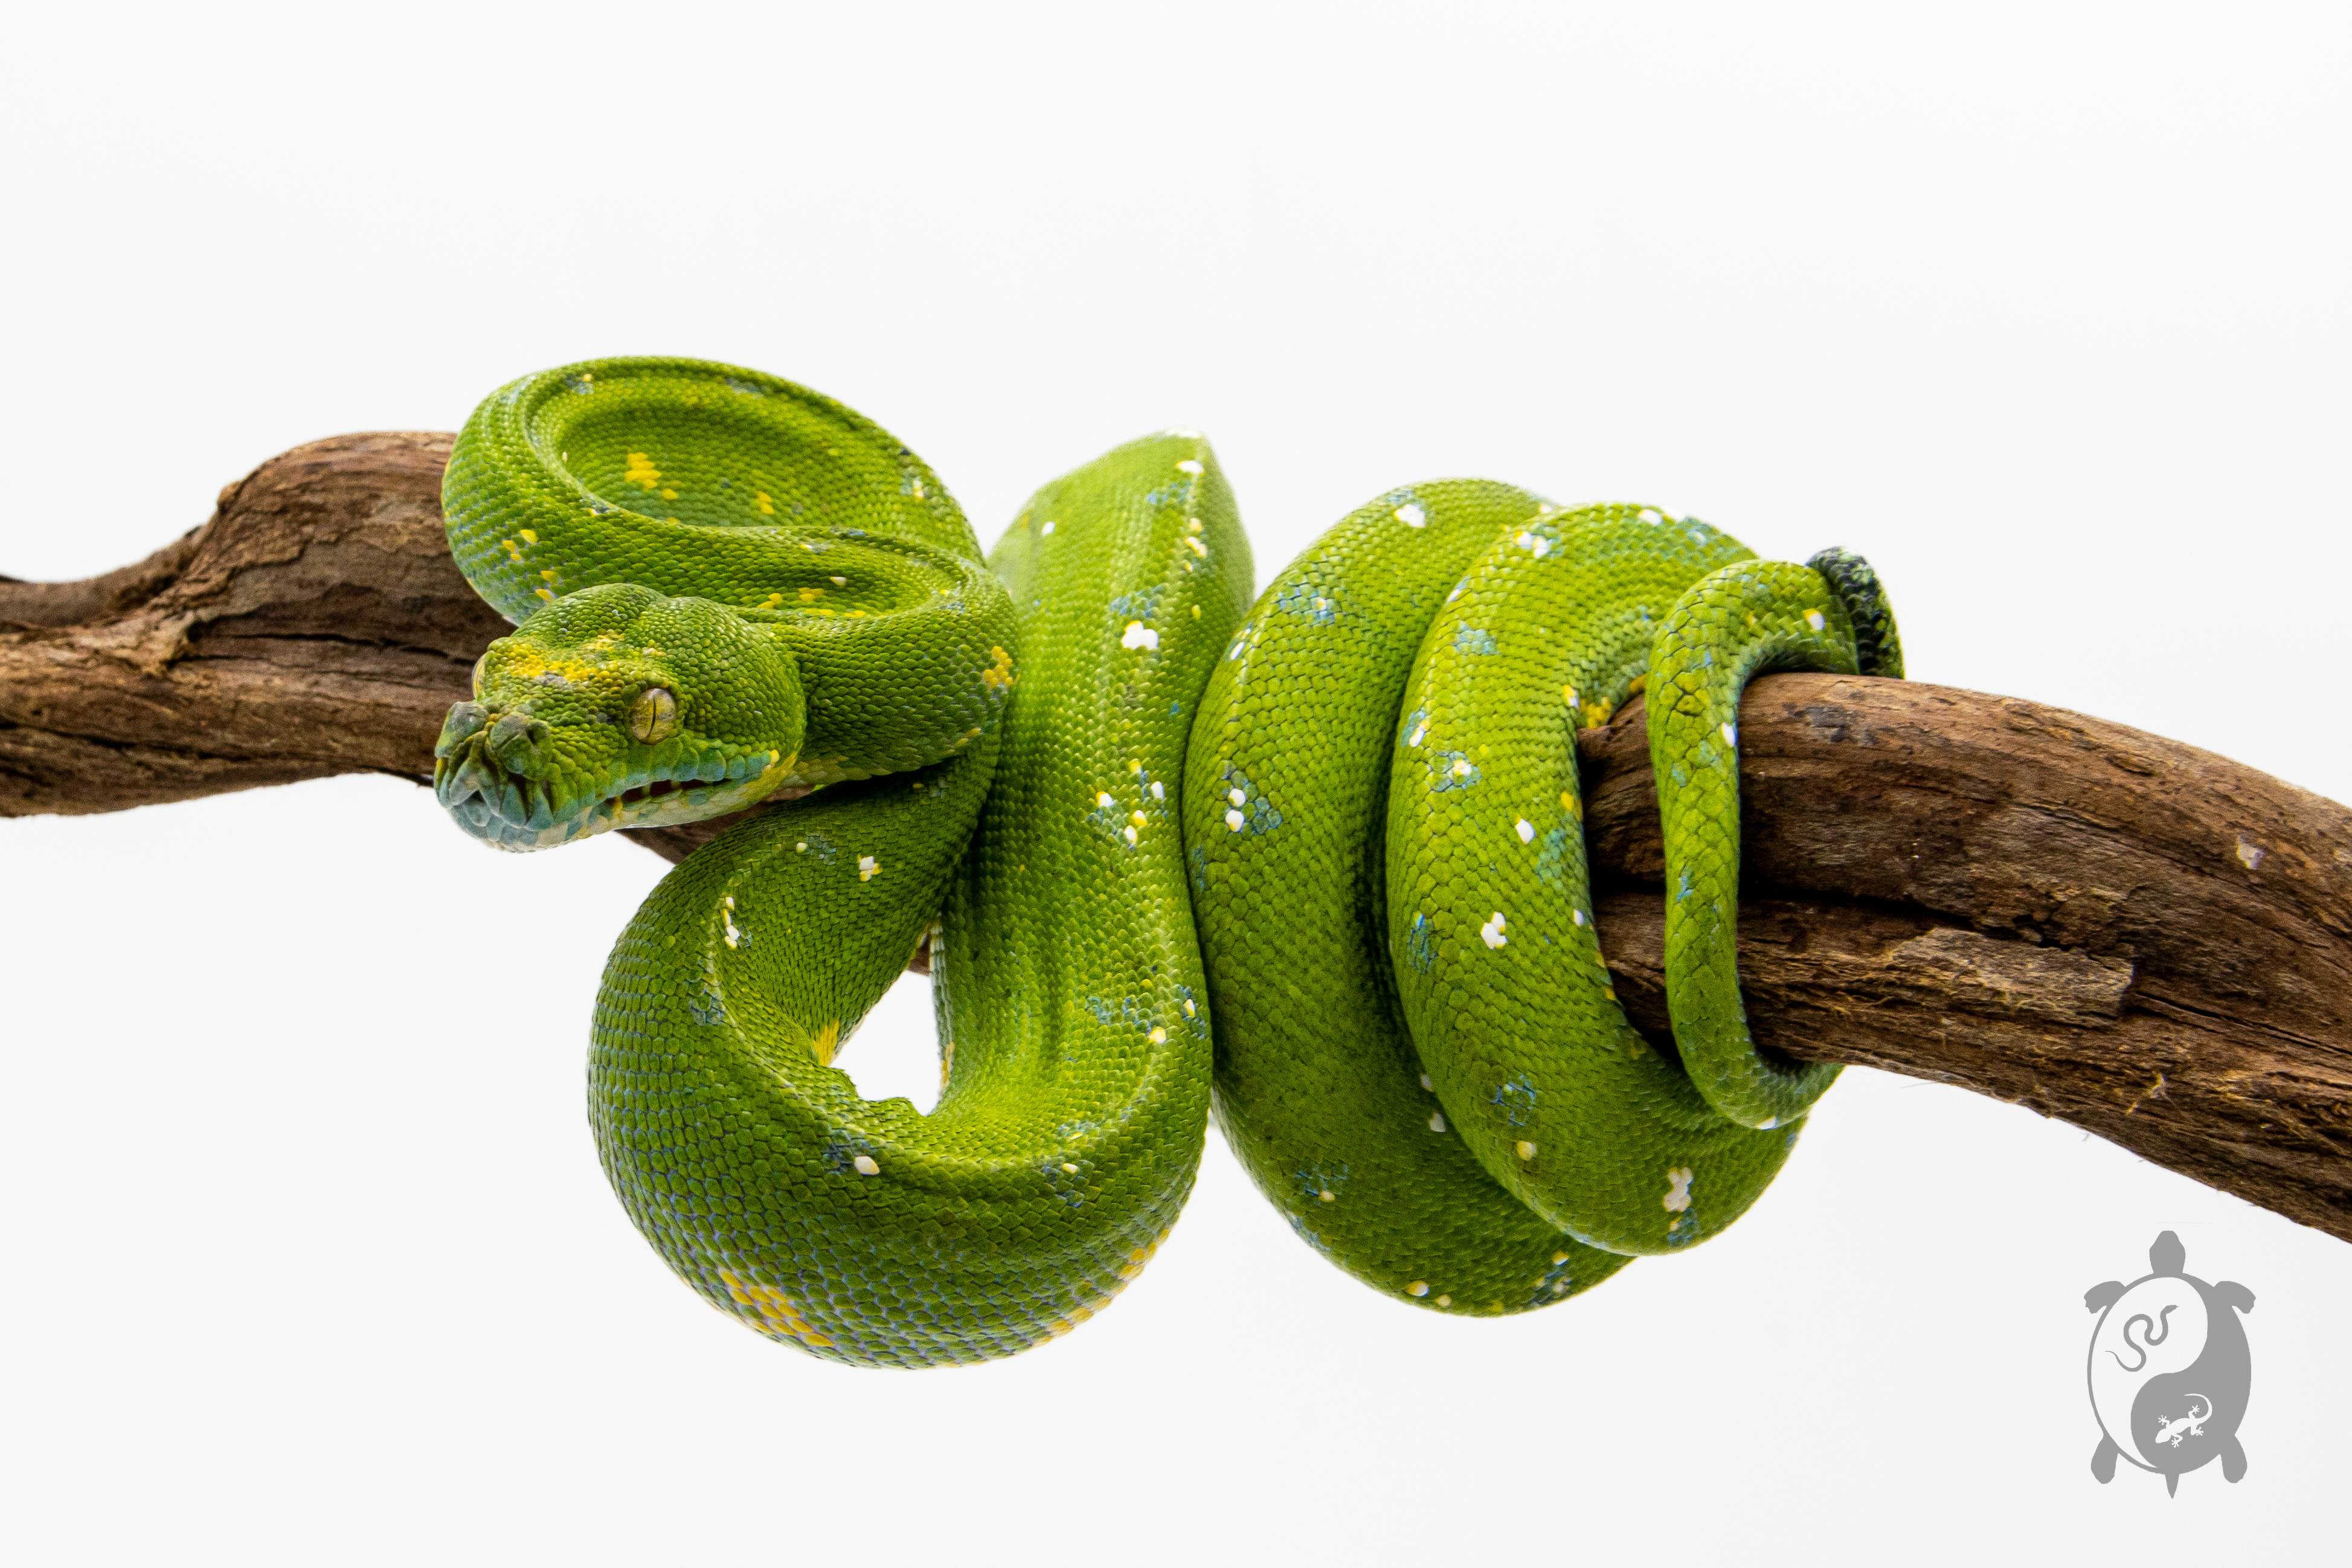 Morelia viridis Biak - Python vert arboricole - Mâle 250228500109696